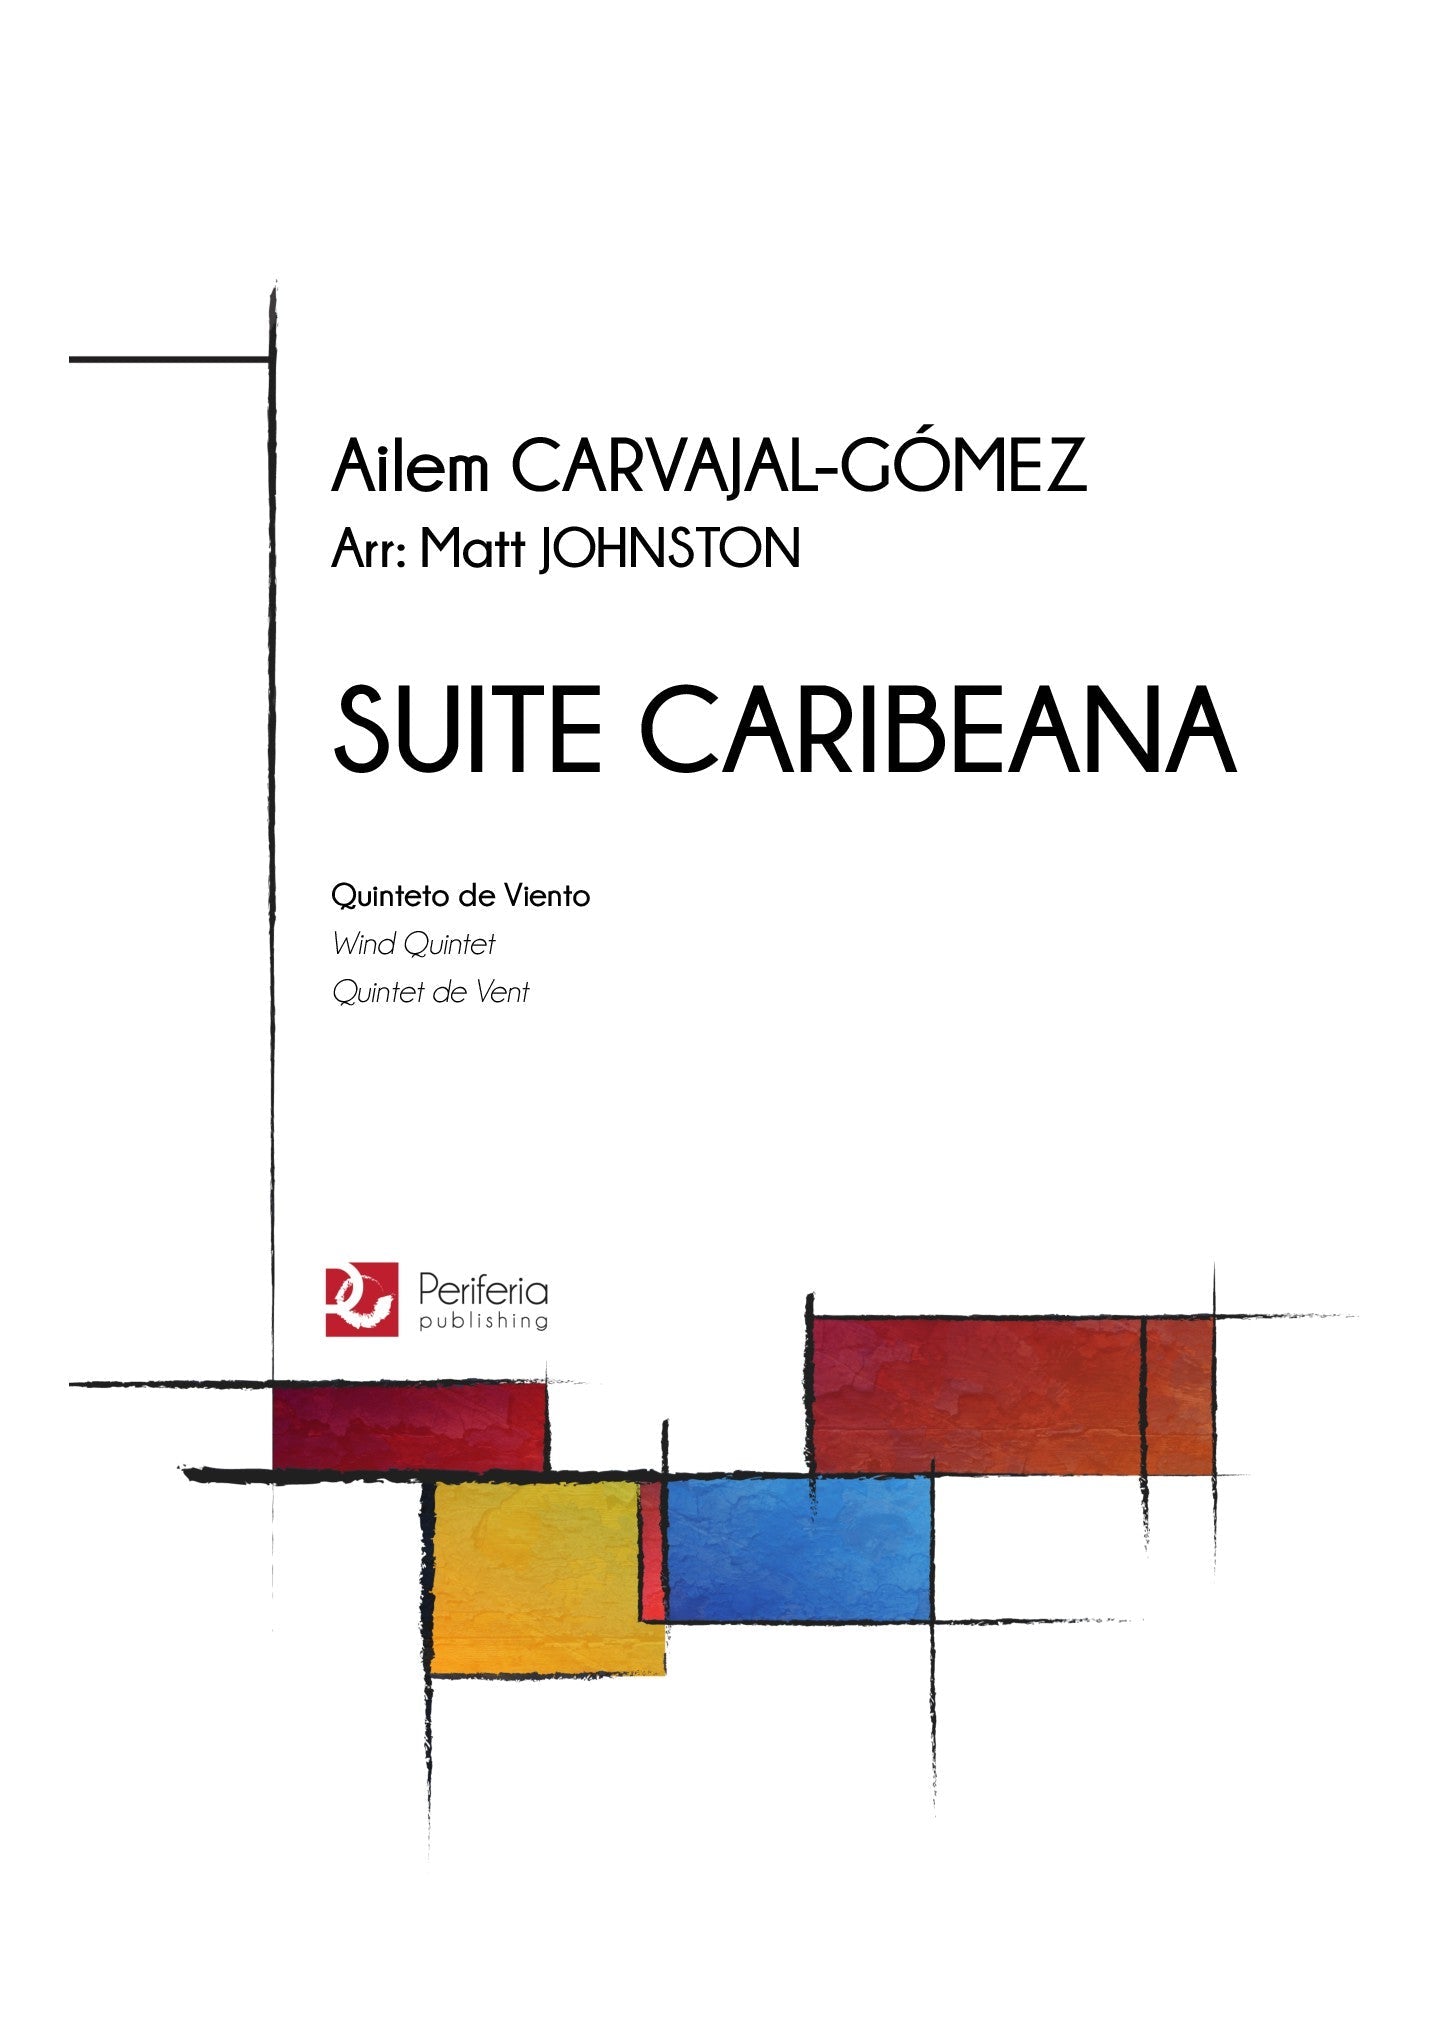 Carvajal-Gómez (arr. Matt Johnston) - Suite Caribeana